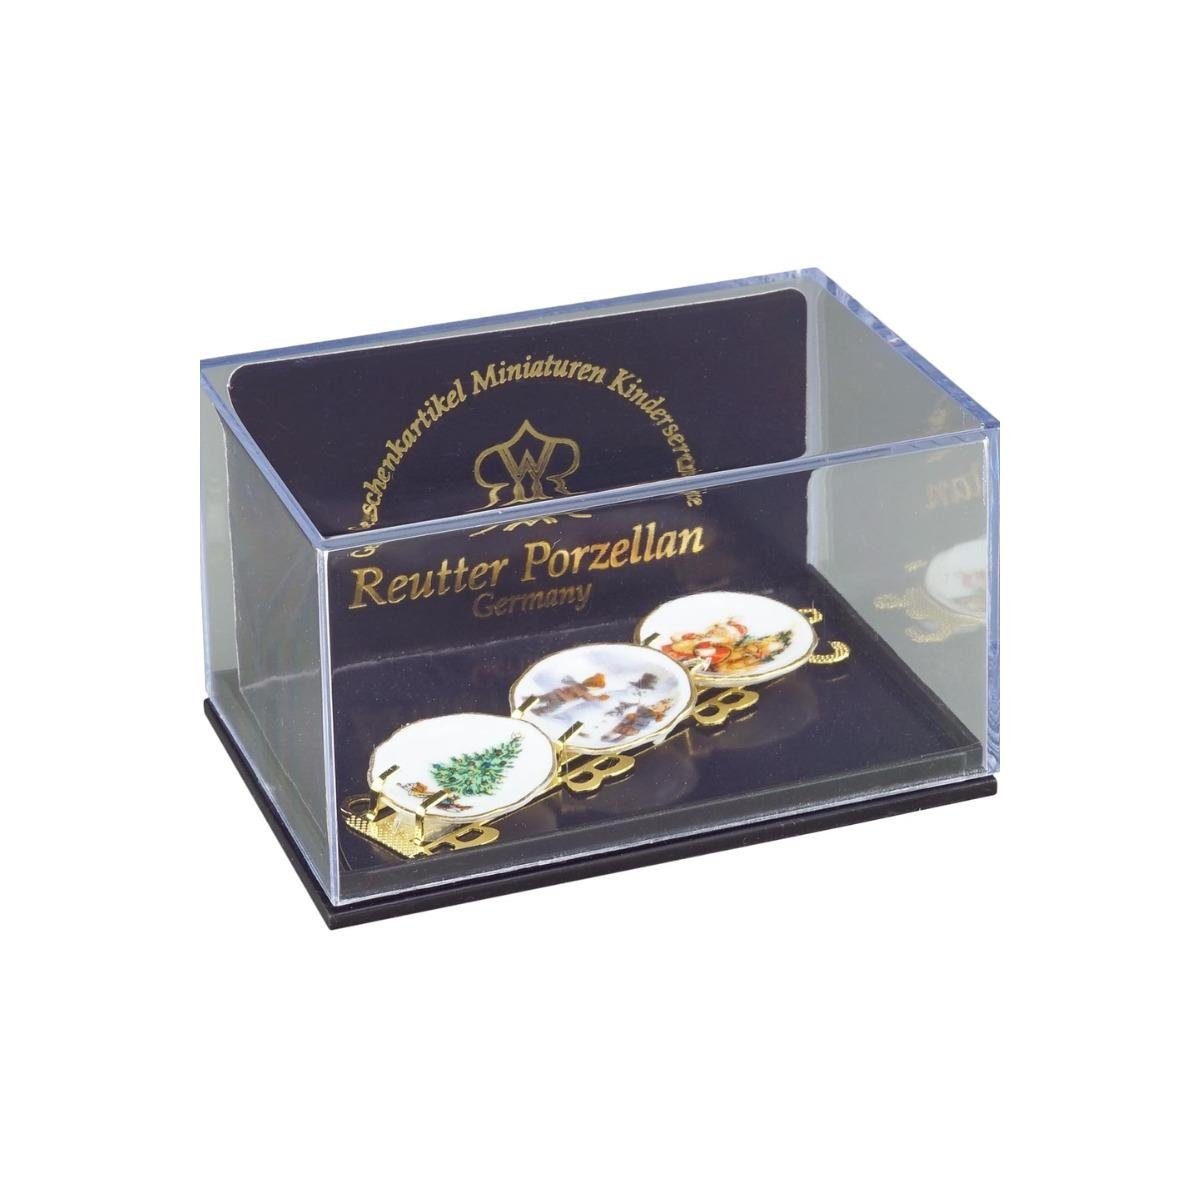 Reutter Porzellan "Weihnachten", Miniatur Tellerregal - 001.388/6 Dekofigur